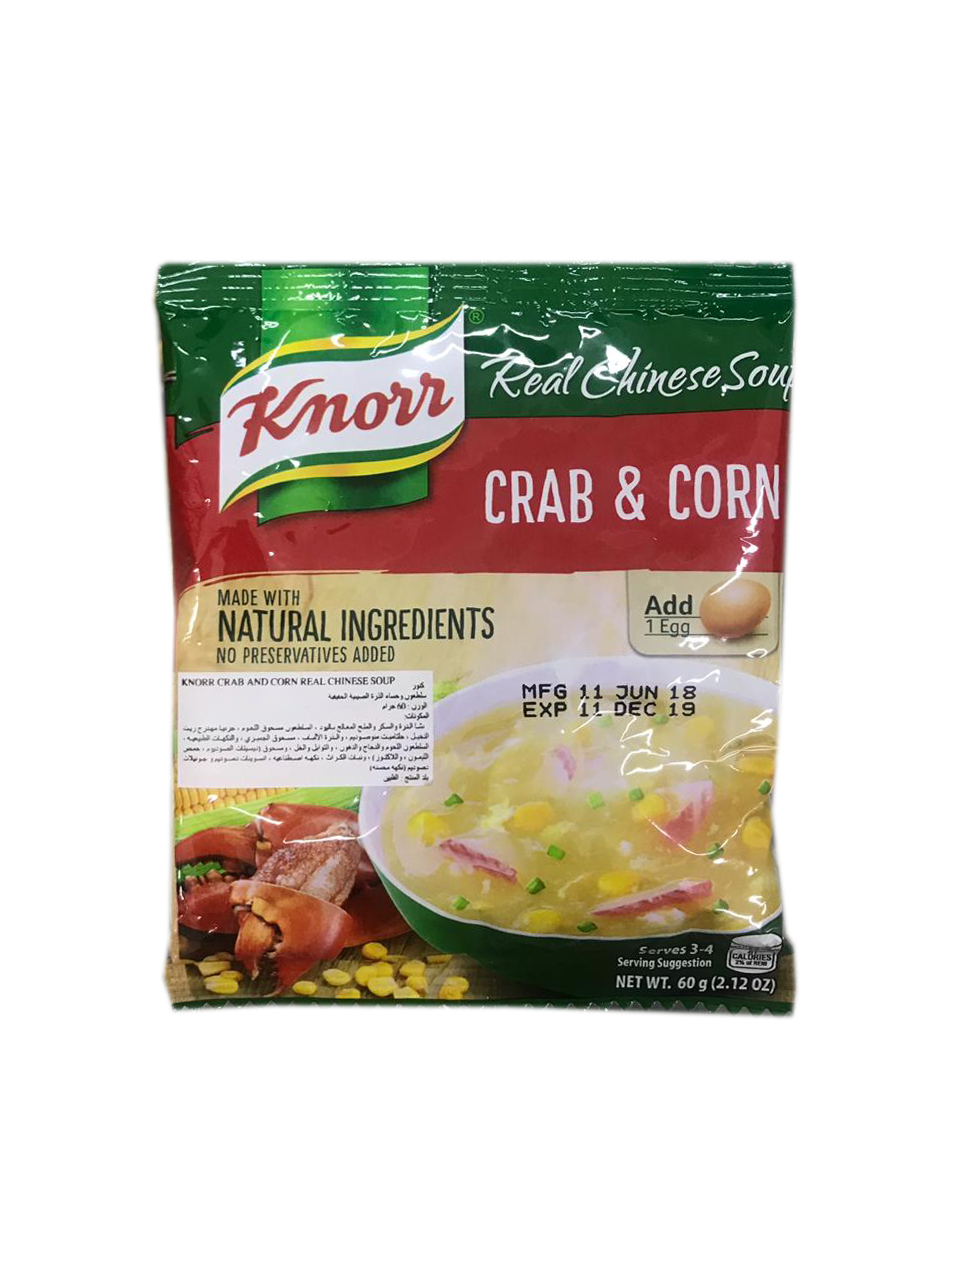 Knorr Crab & Corn Soup 60g